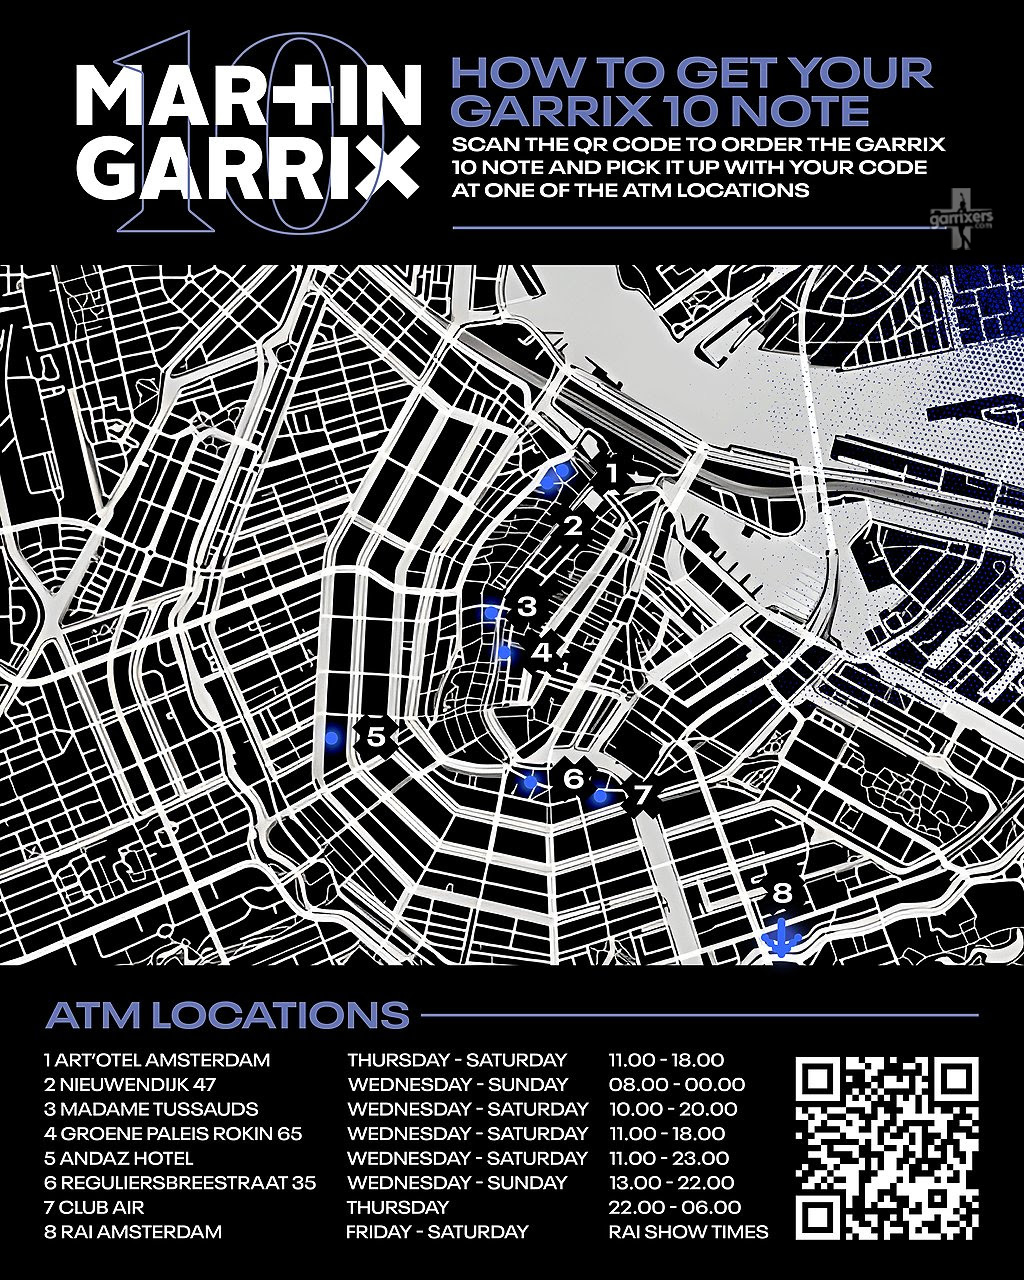 Martin Garrix charity notes on garrixers.com